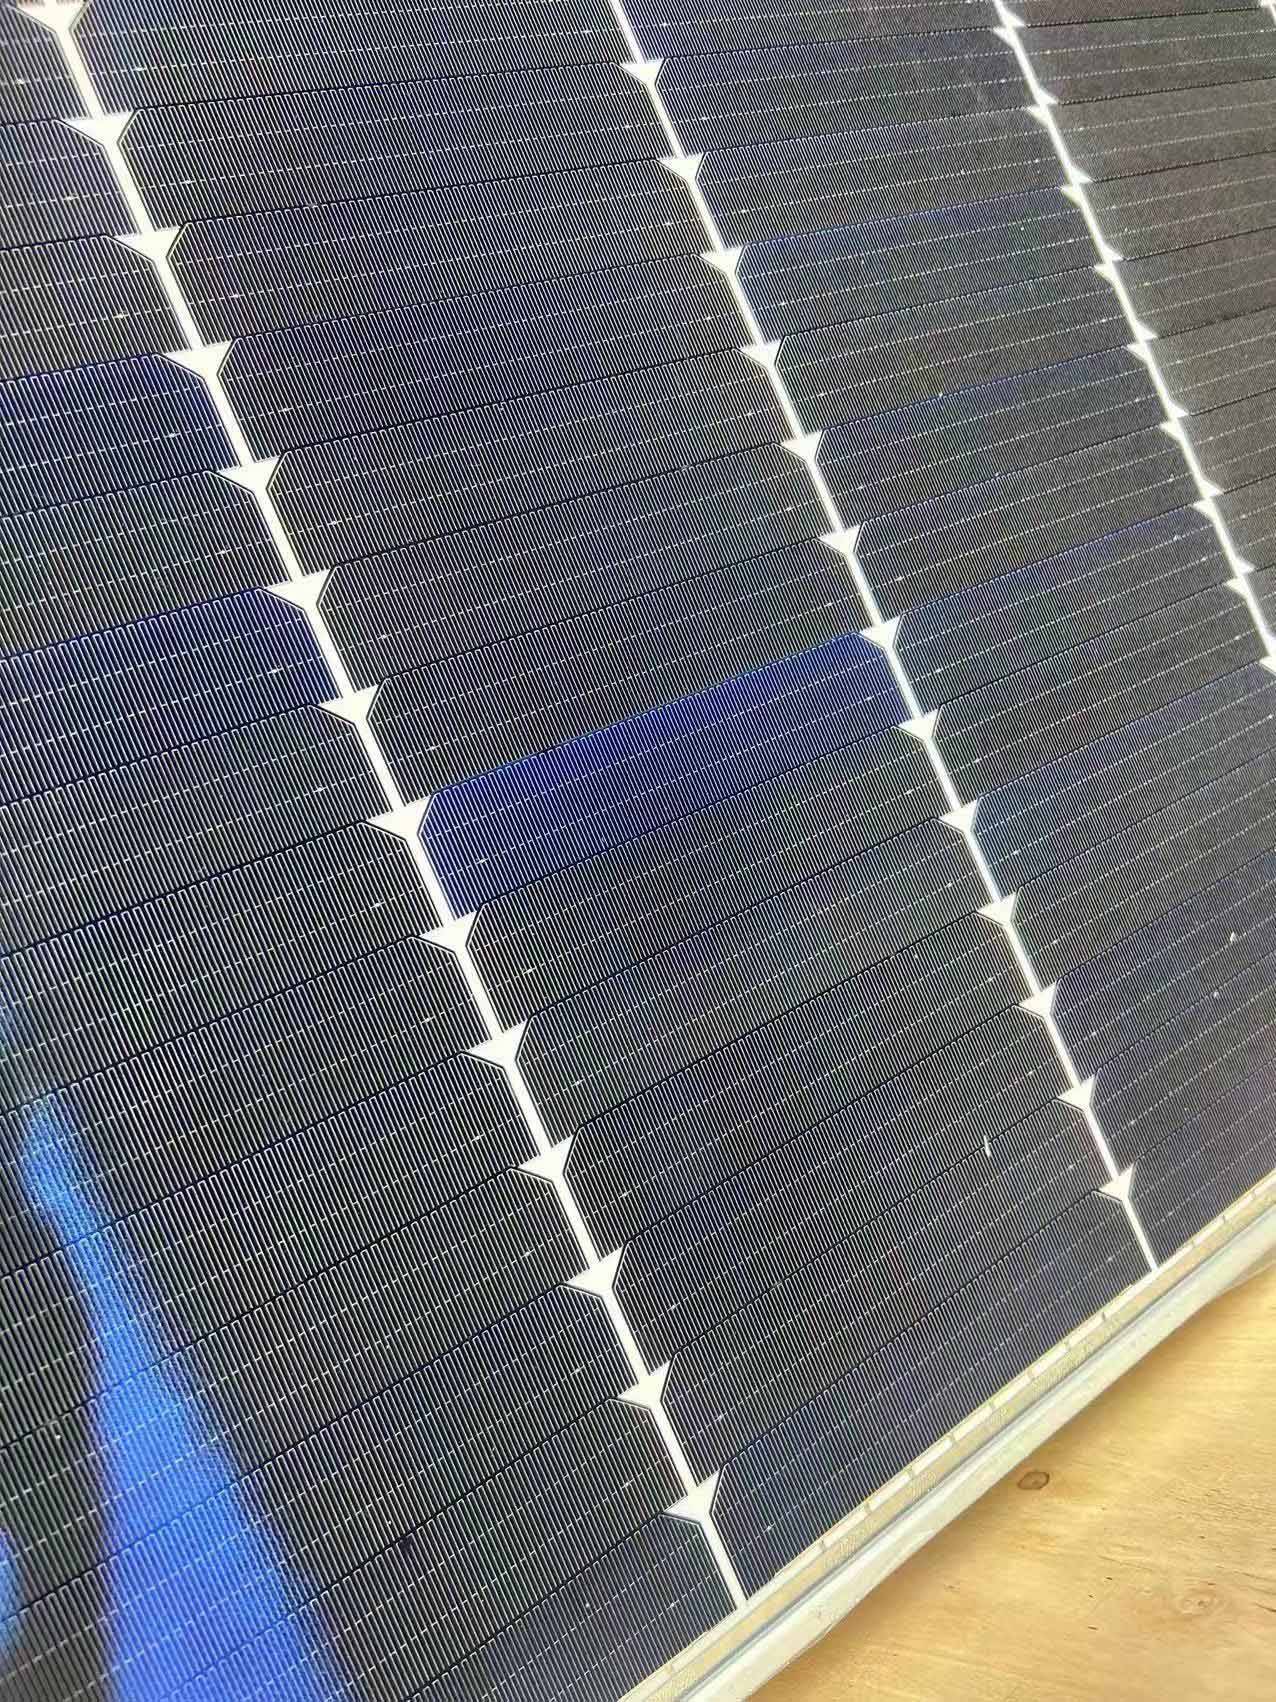 Black Solar Panel On Roof